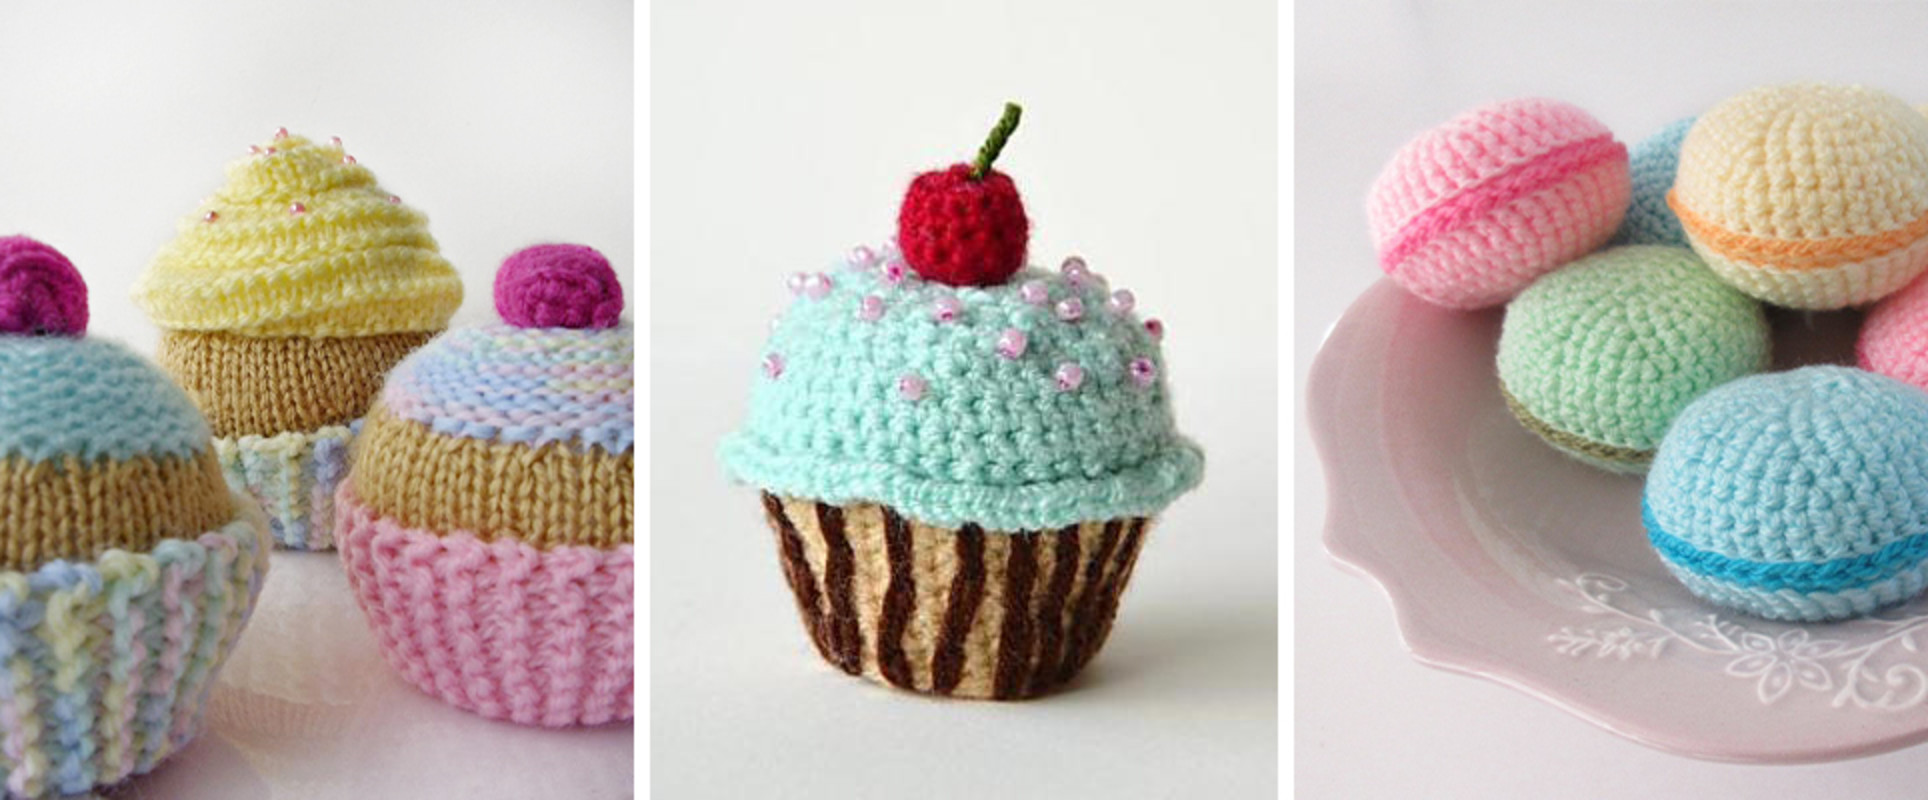 How to make a knitting basket cake - Cake Journal